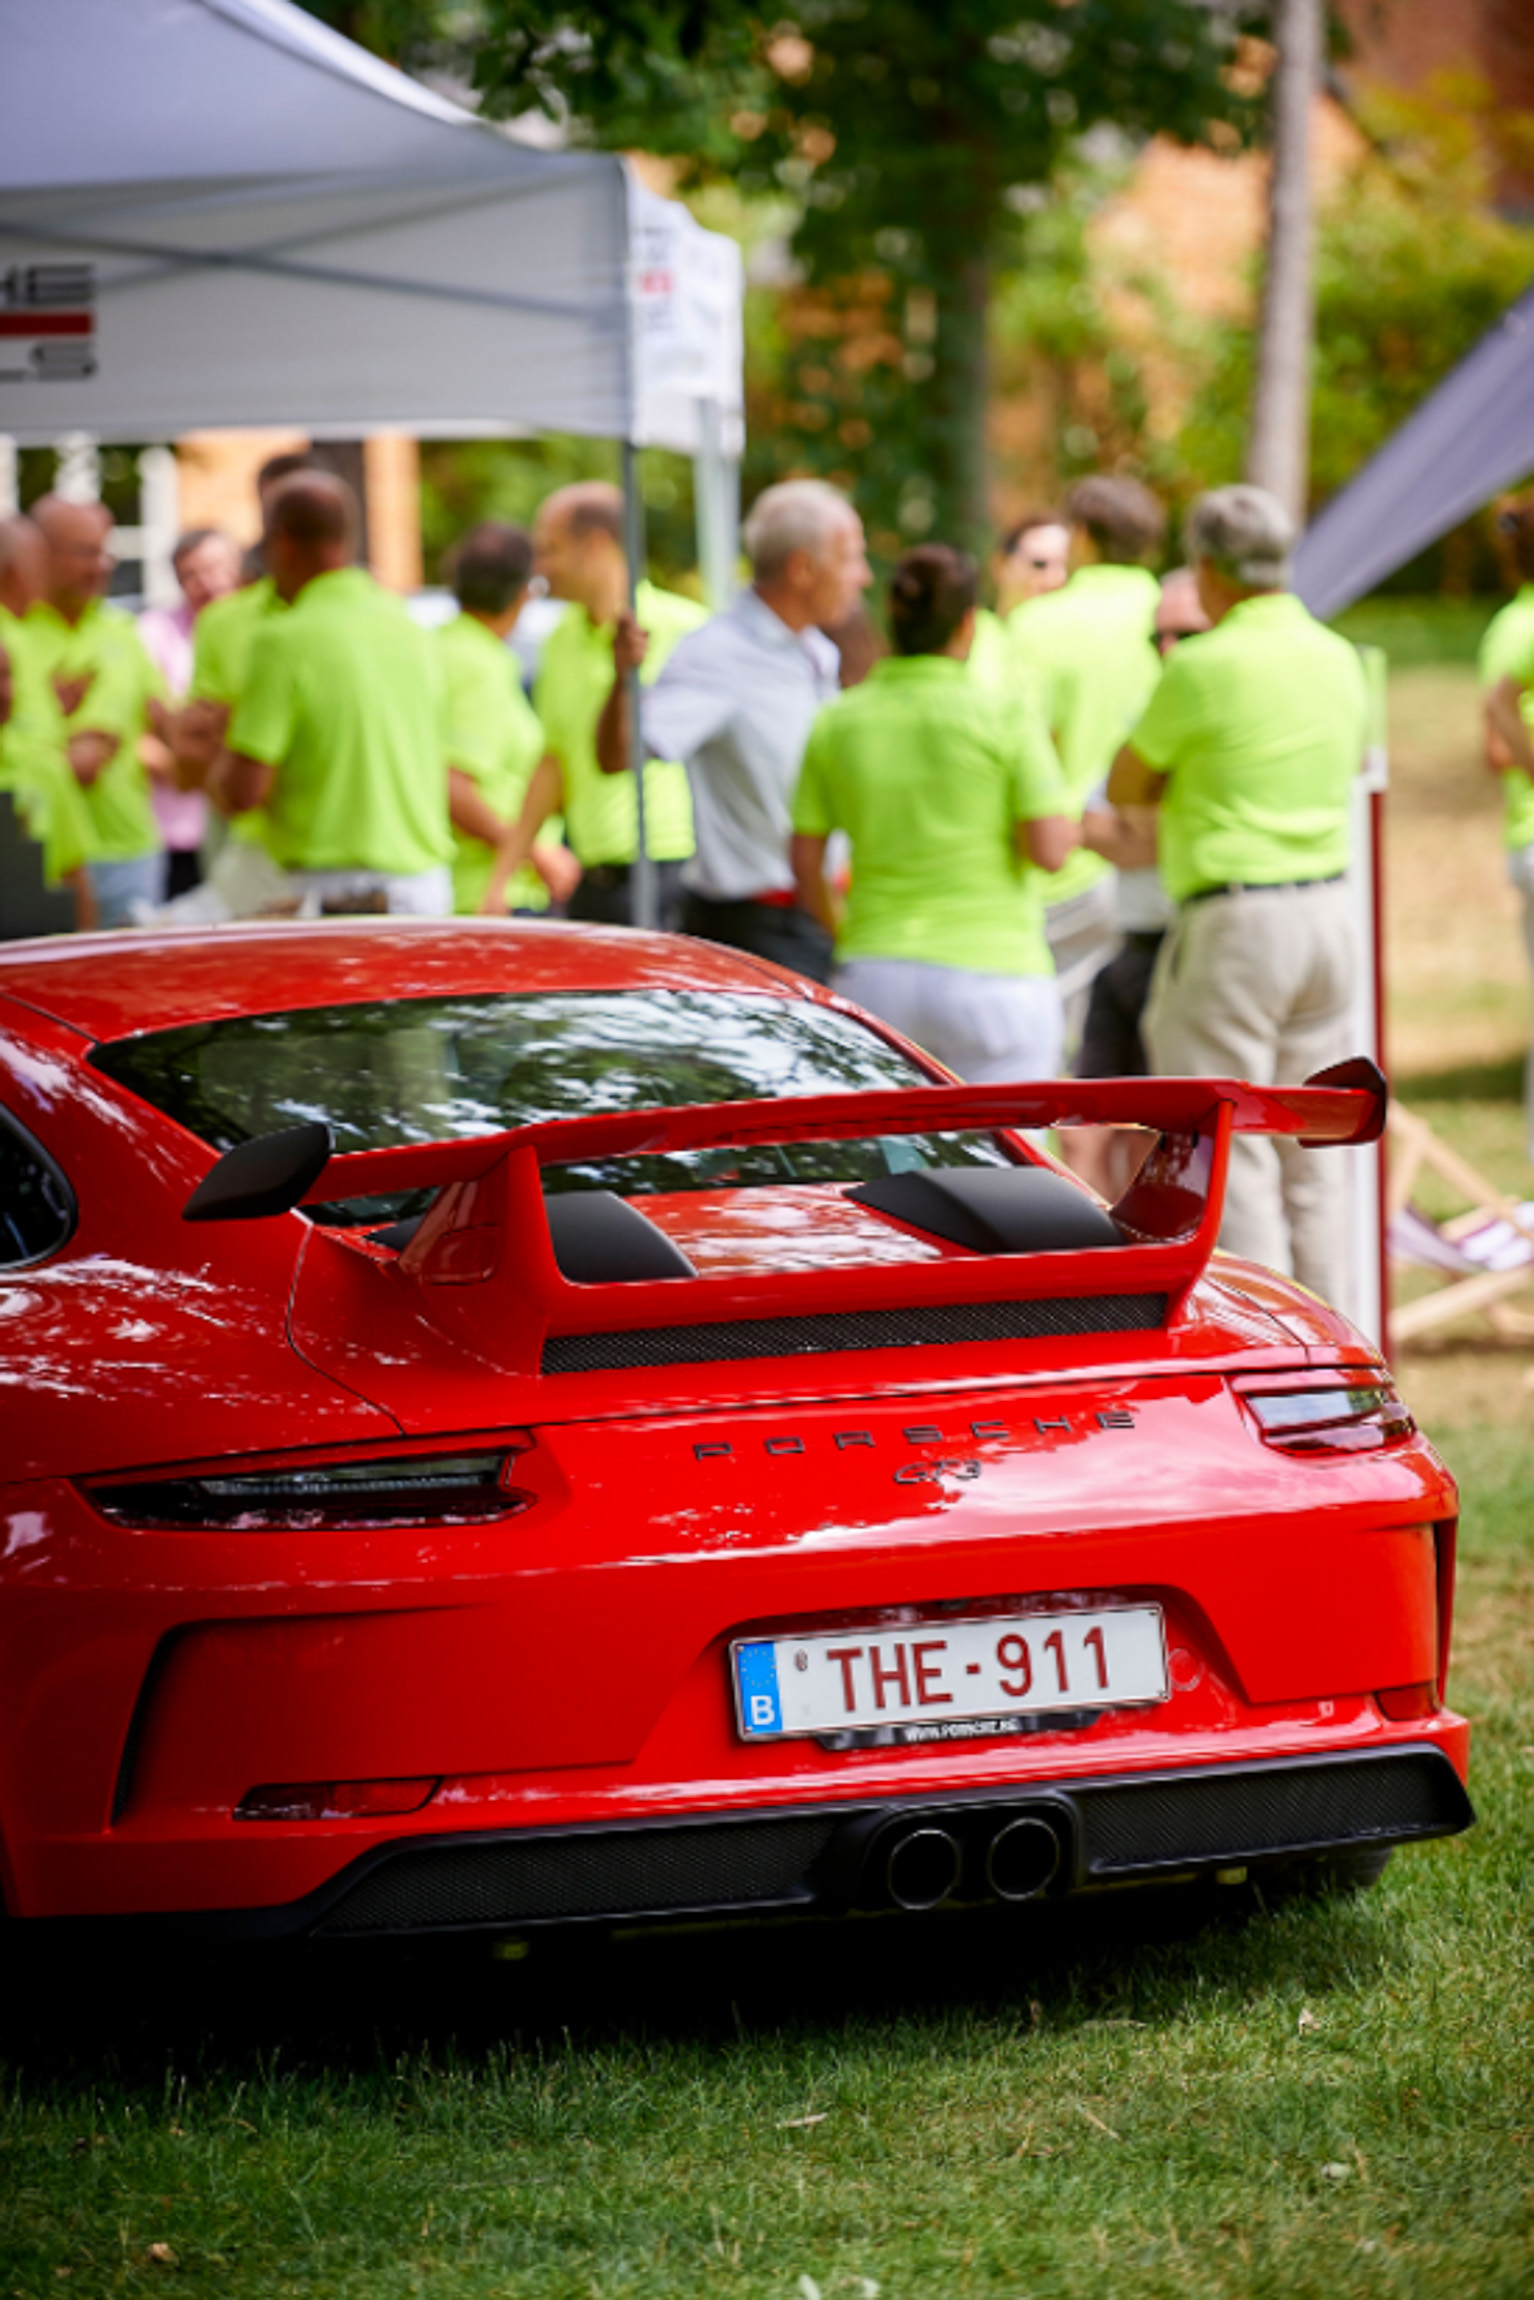 Belgium Sothebys Int. Realty Golfing with Porsche